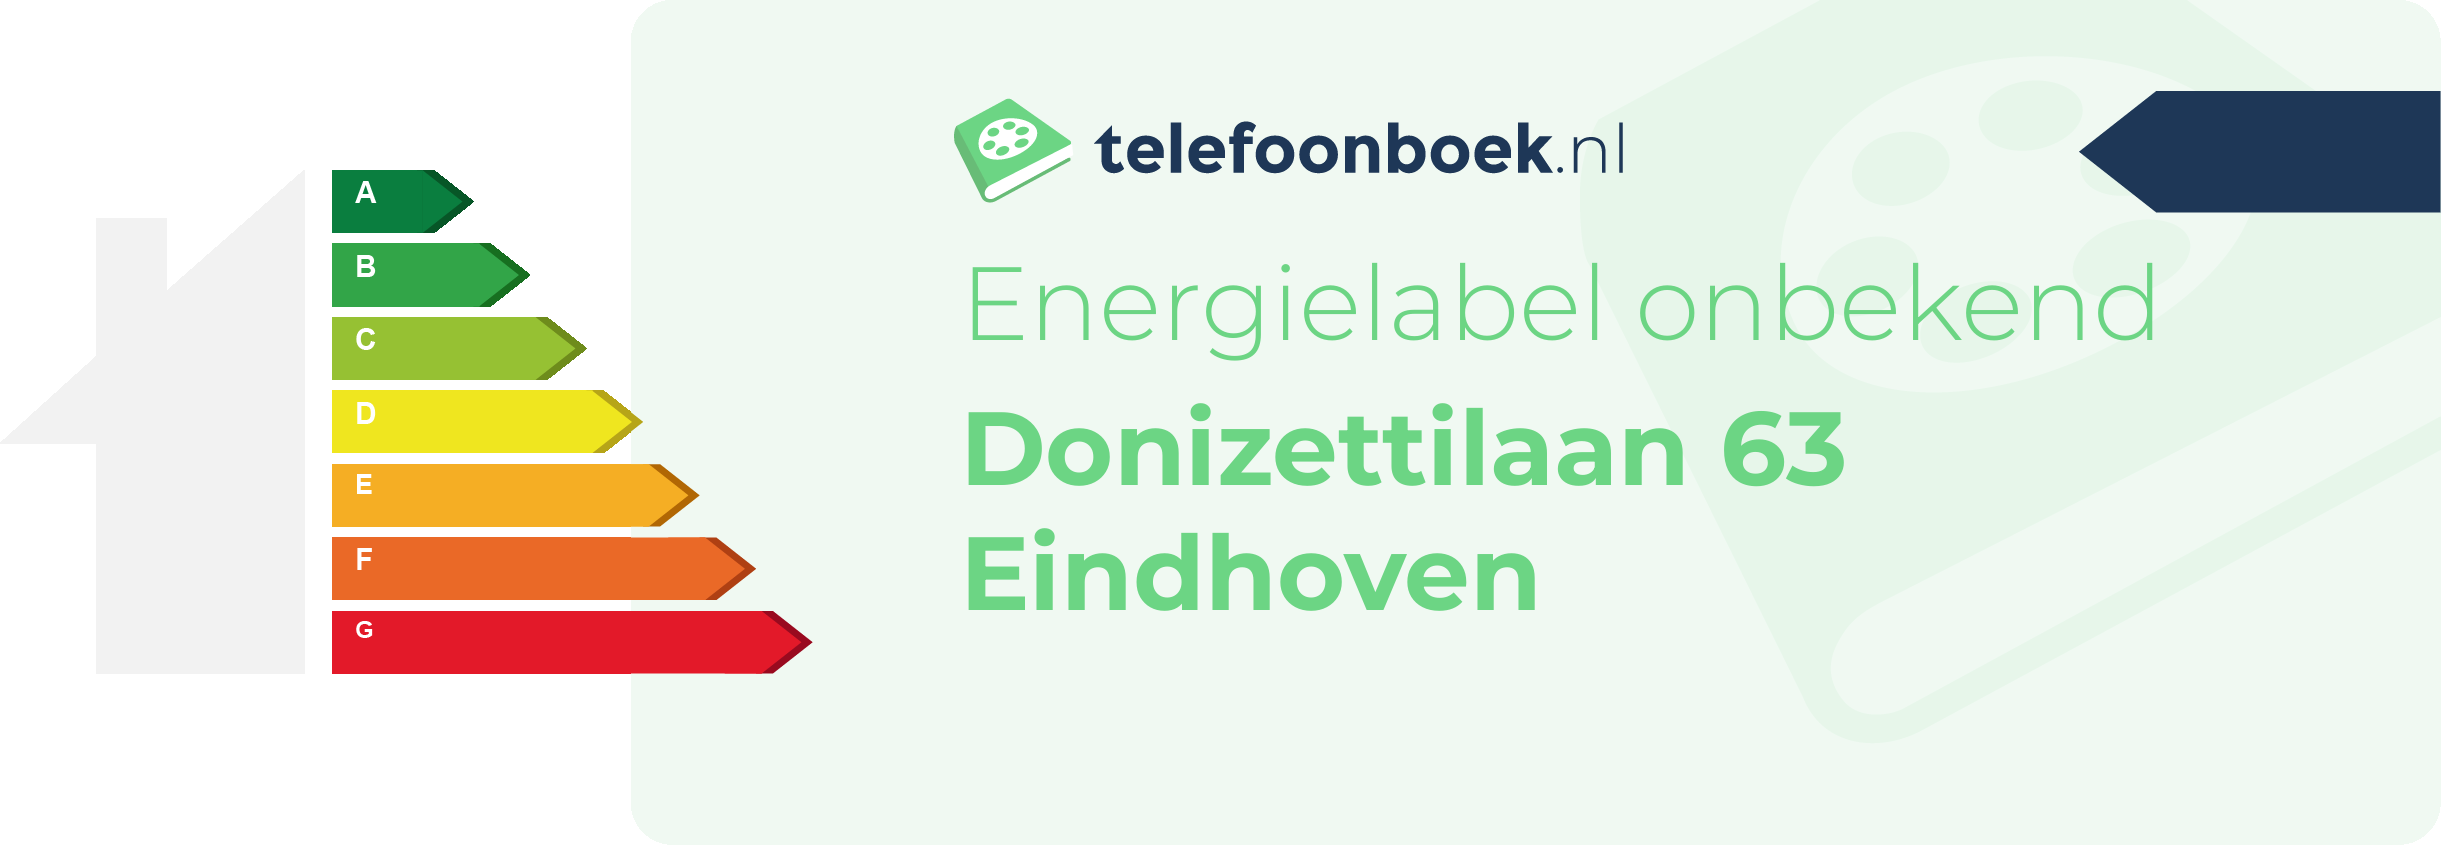 Energielabel Donizettilaan 63 Eindhoven